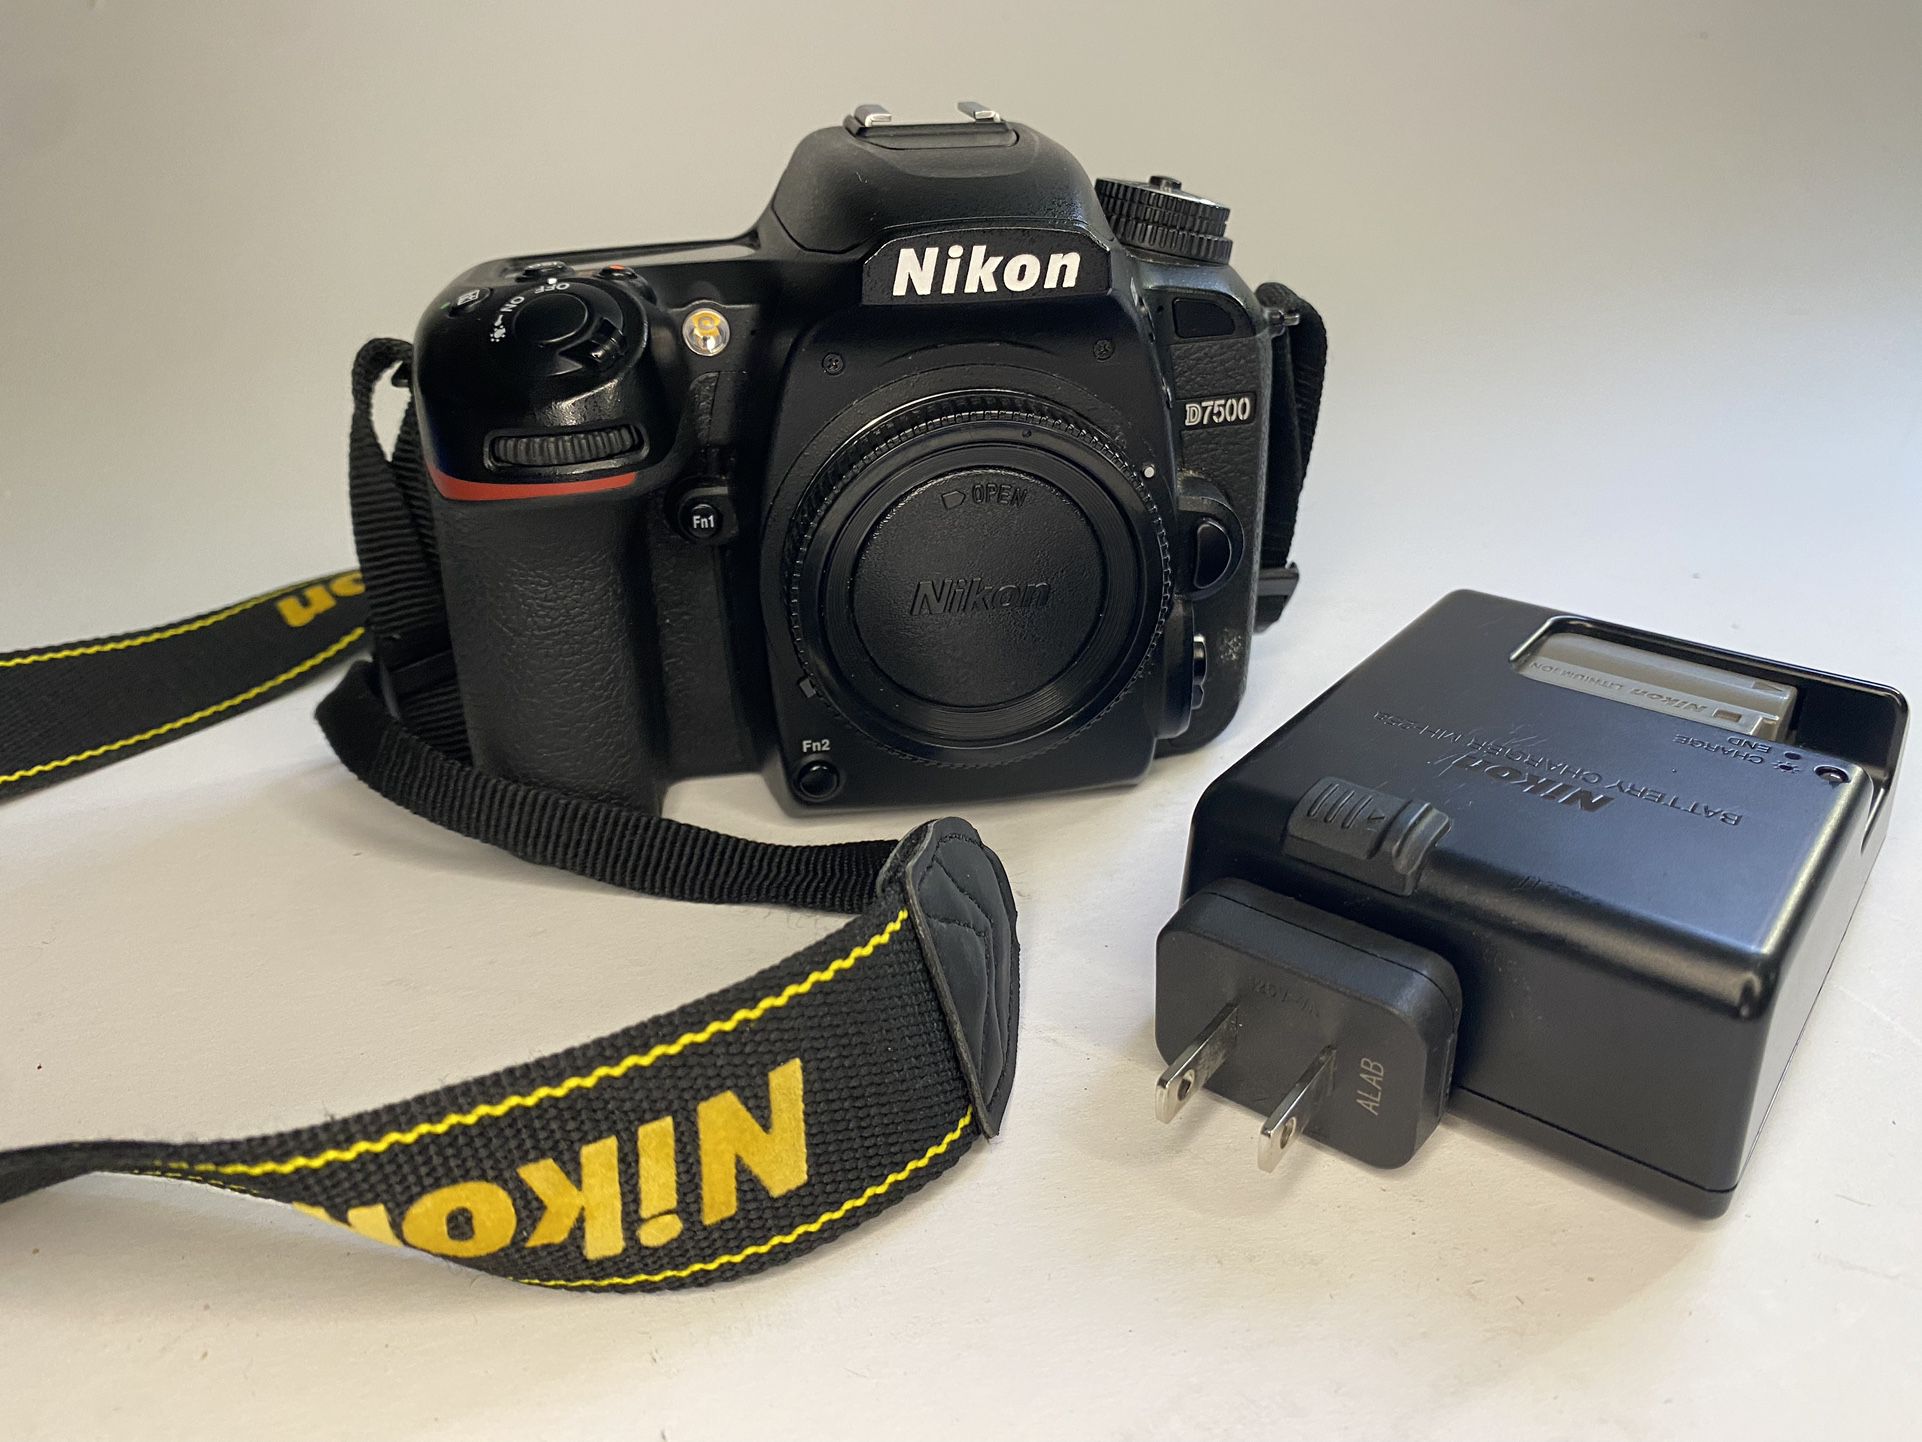 Nikon D7500 20.9MP Digital SLR Camera - 16k Shutter Count (Body Only)